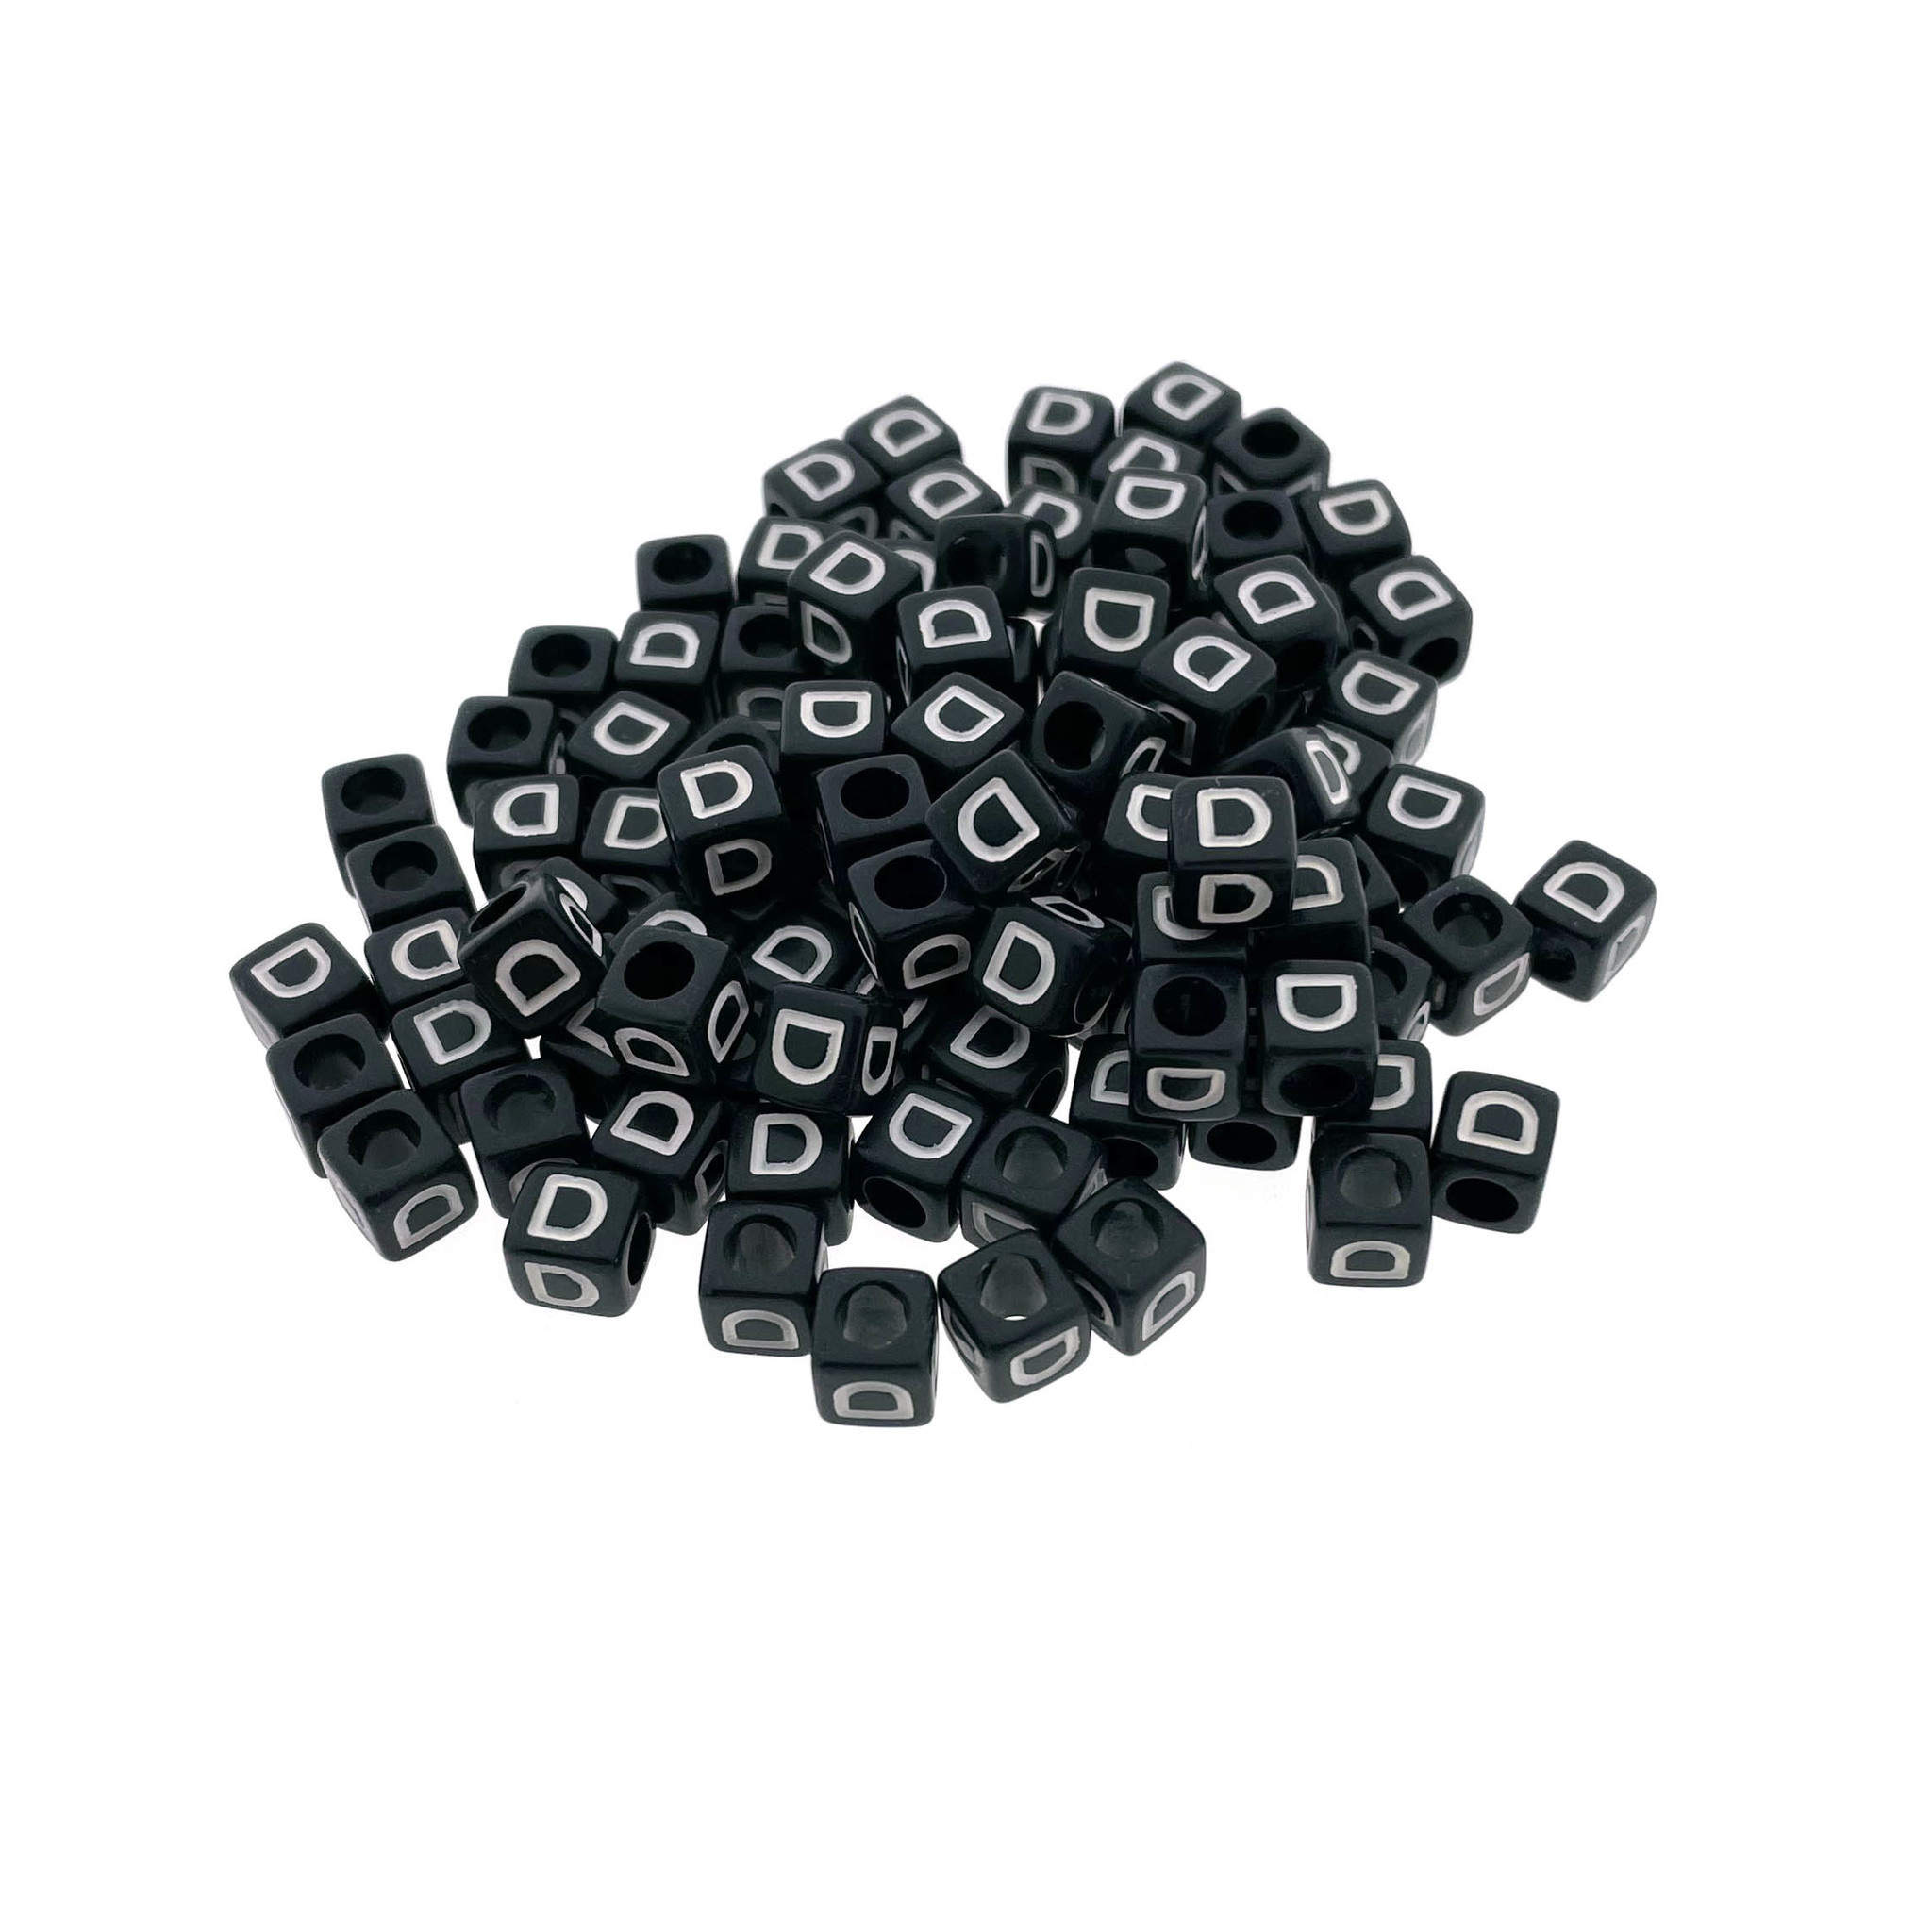 Buy Paracord alphabet letter beads Black D at 123Paracord